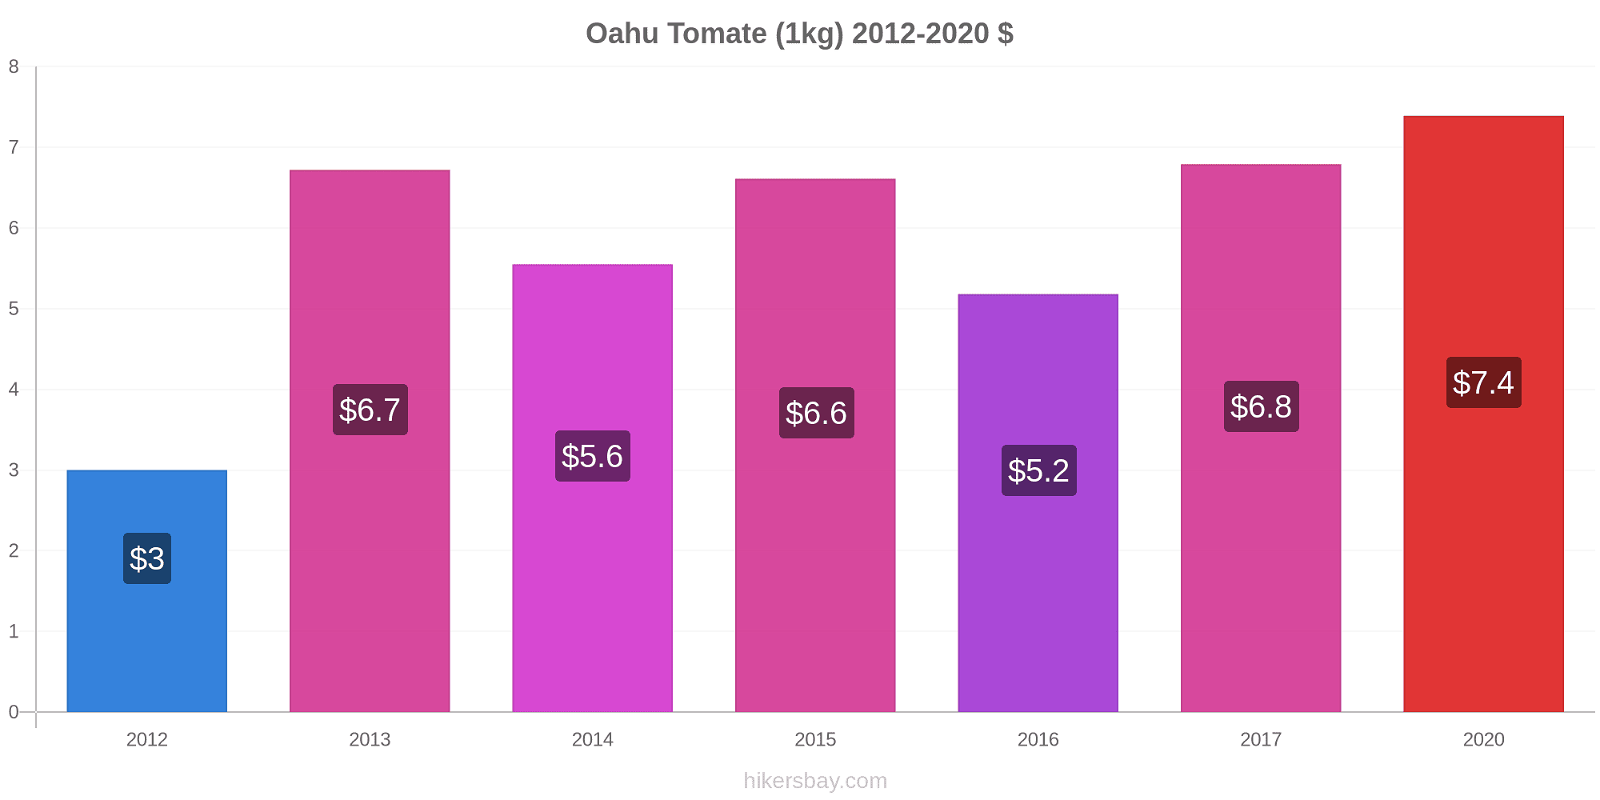 Oahu cambios de precios Tomate (1kg) hikersbay.com